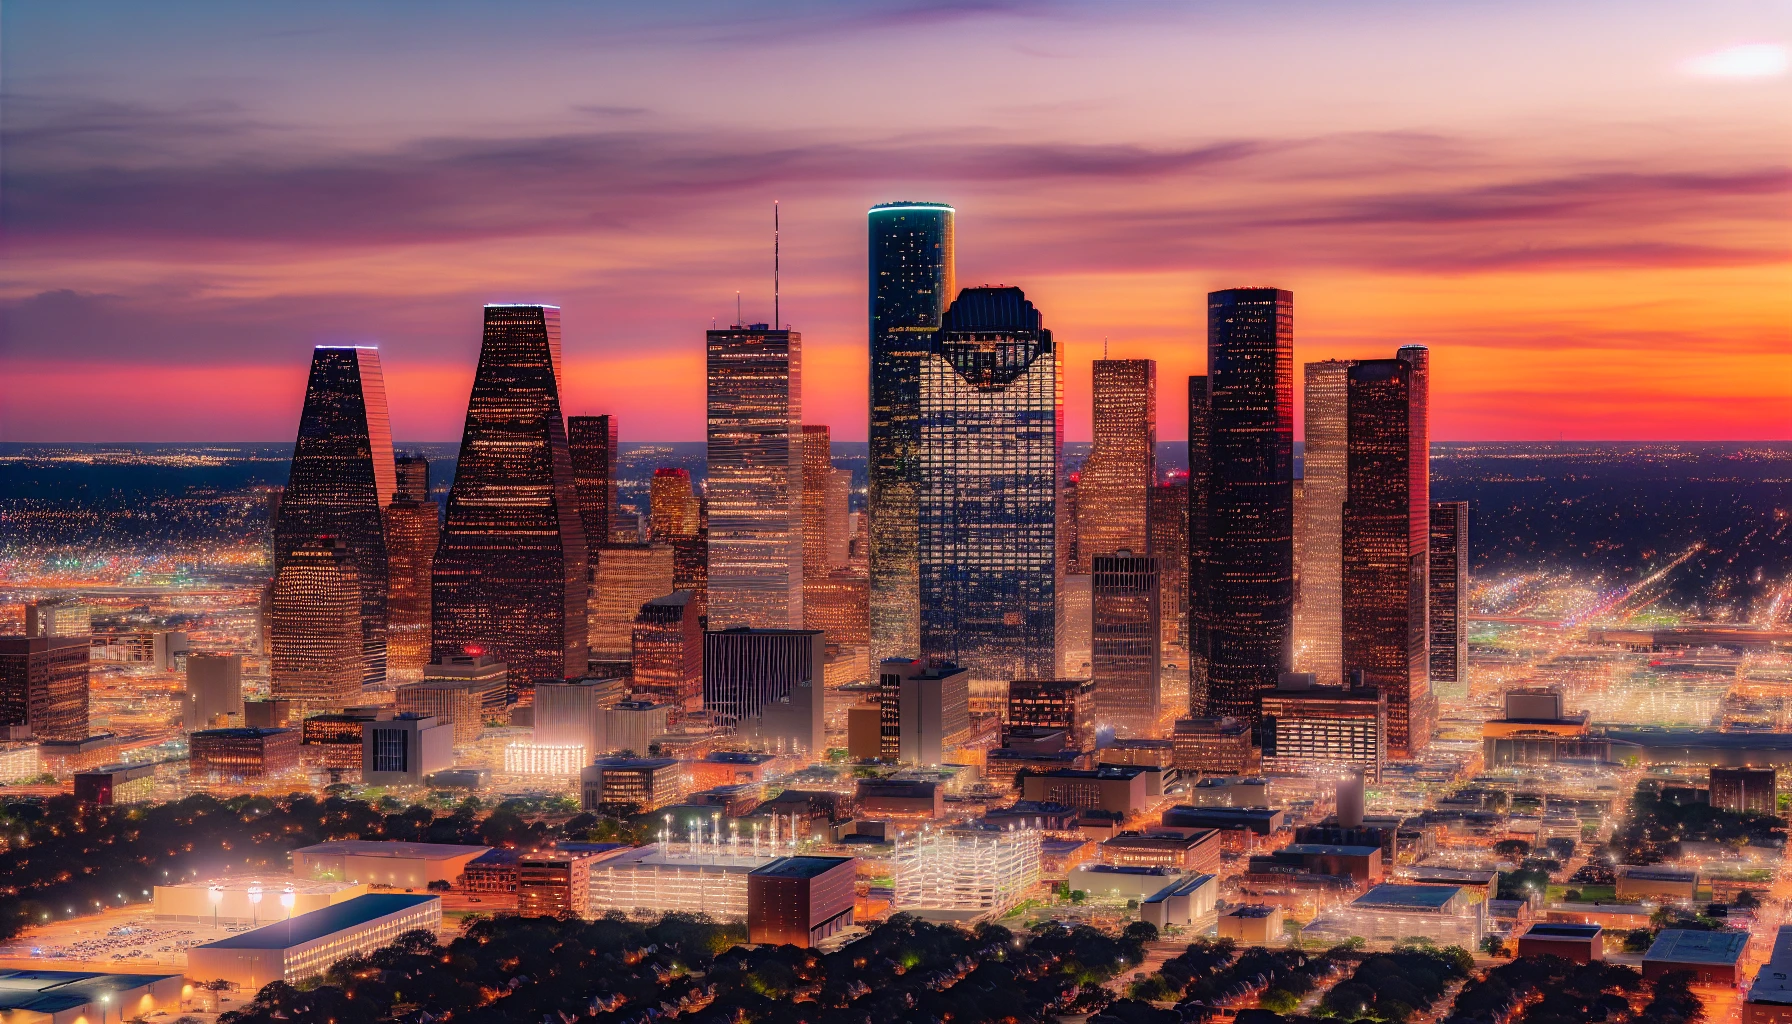 Houston skyline at sunset with city lights